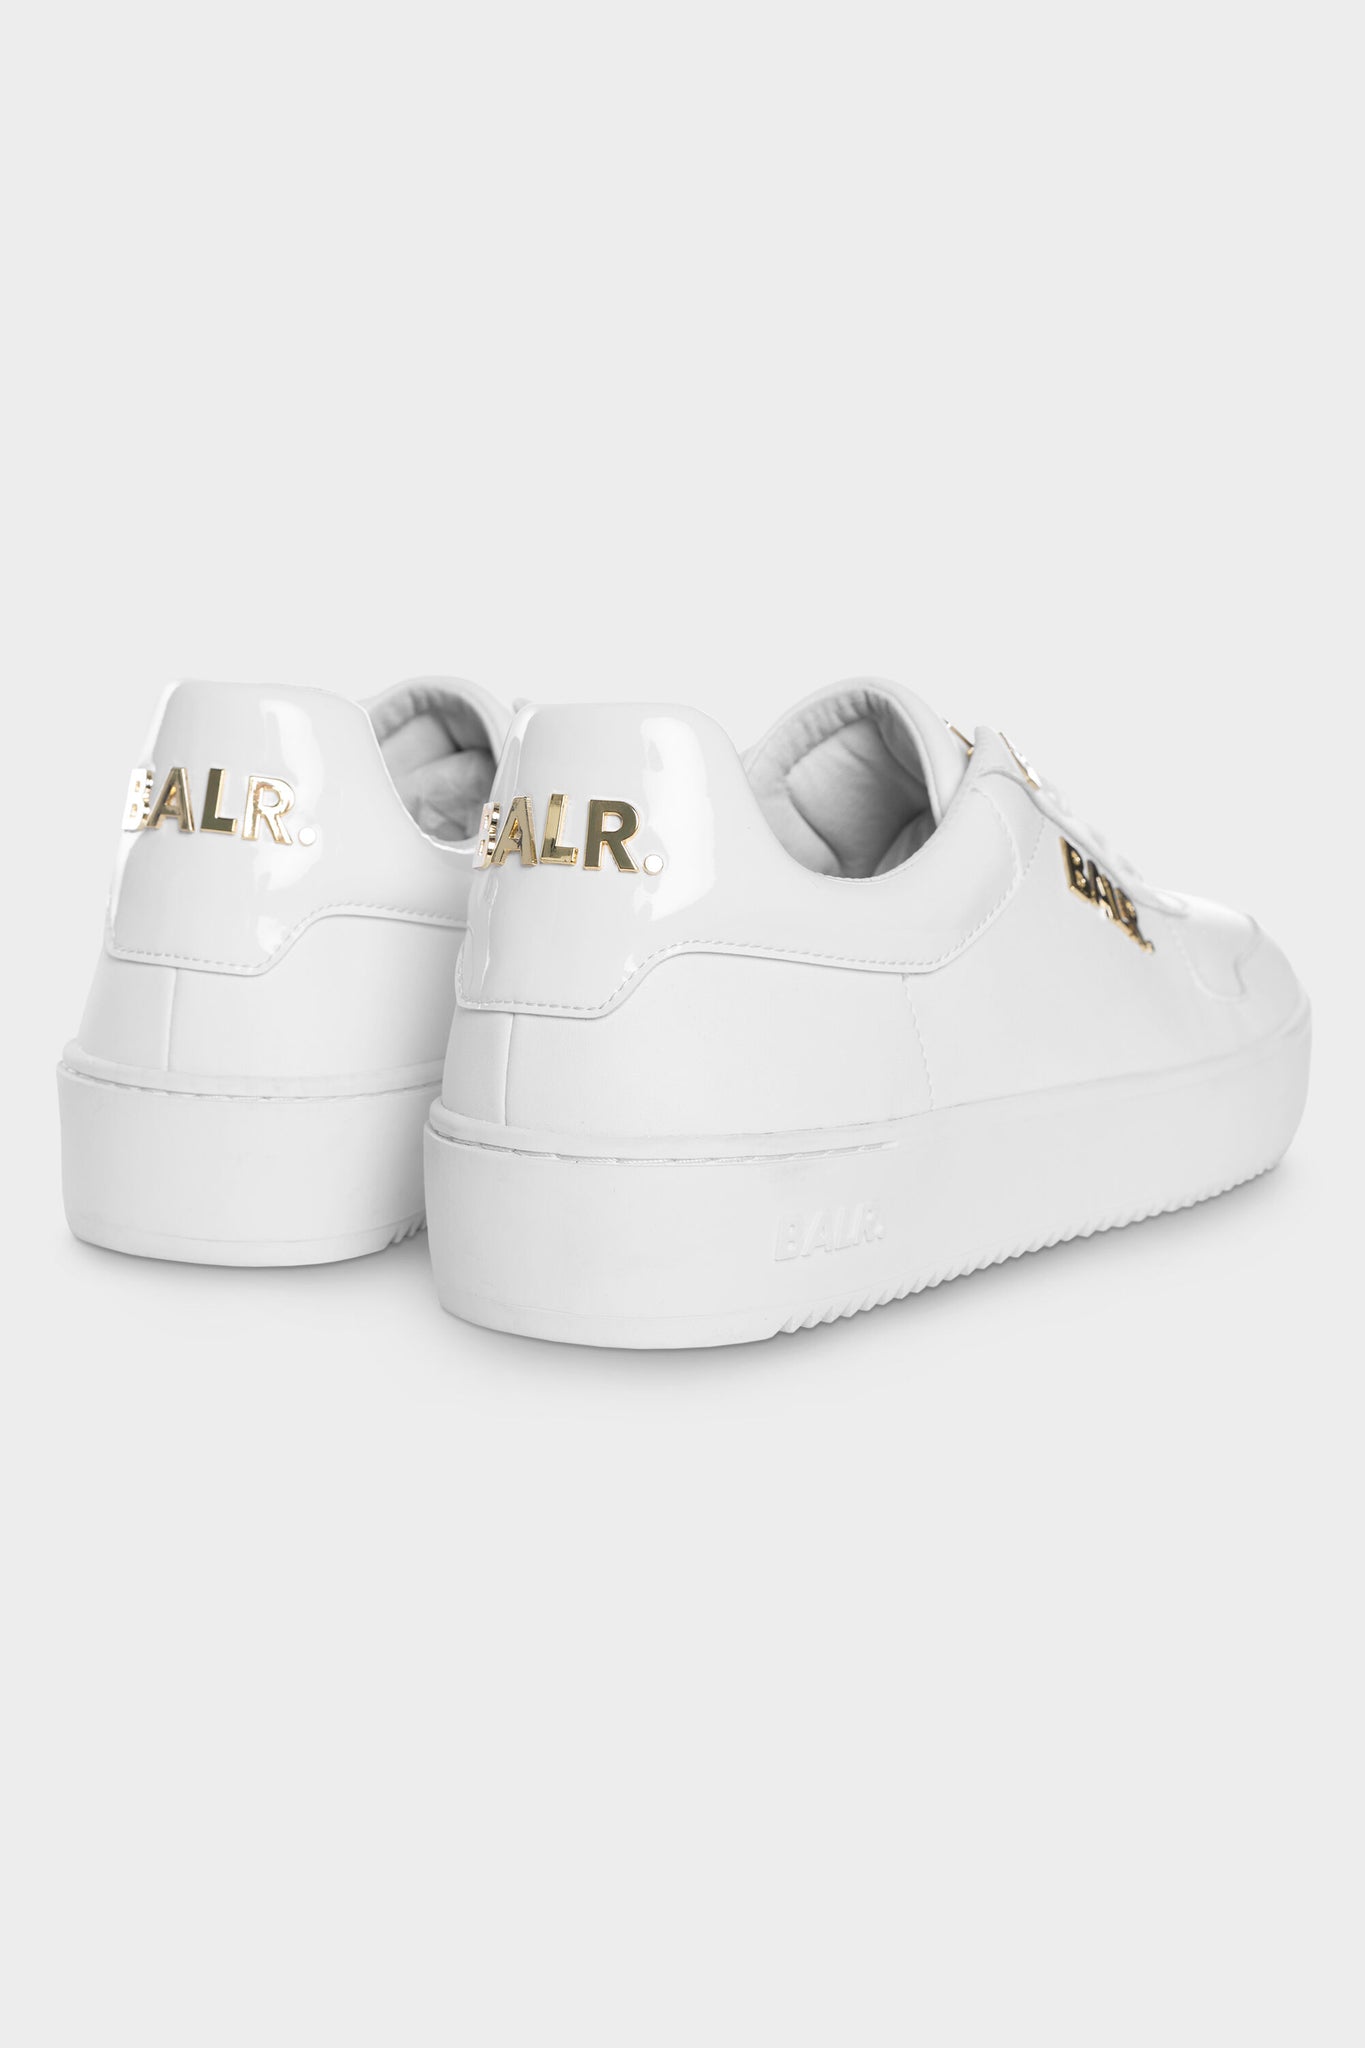 Metal Logo Sneakers Men White/Gold – BALR.